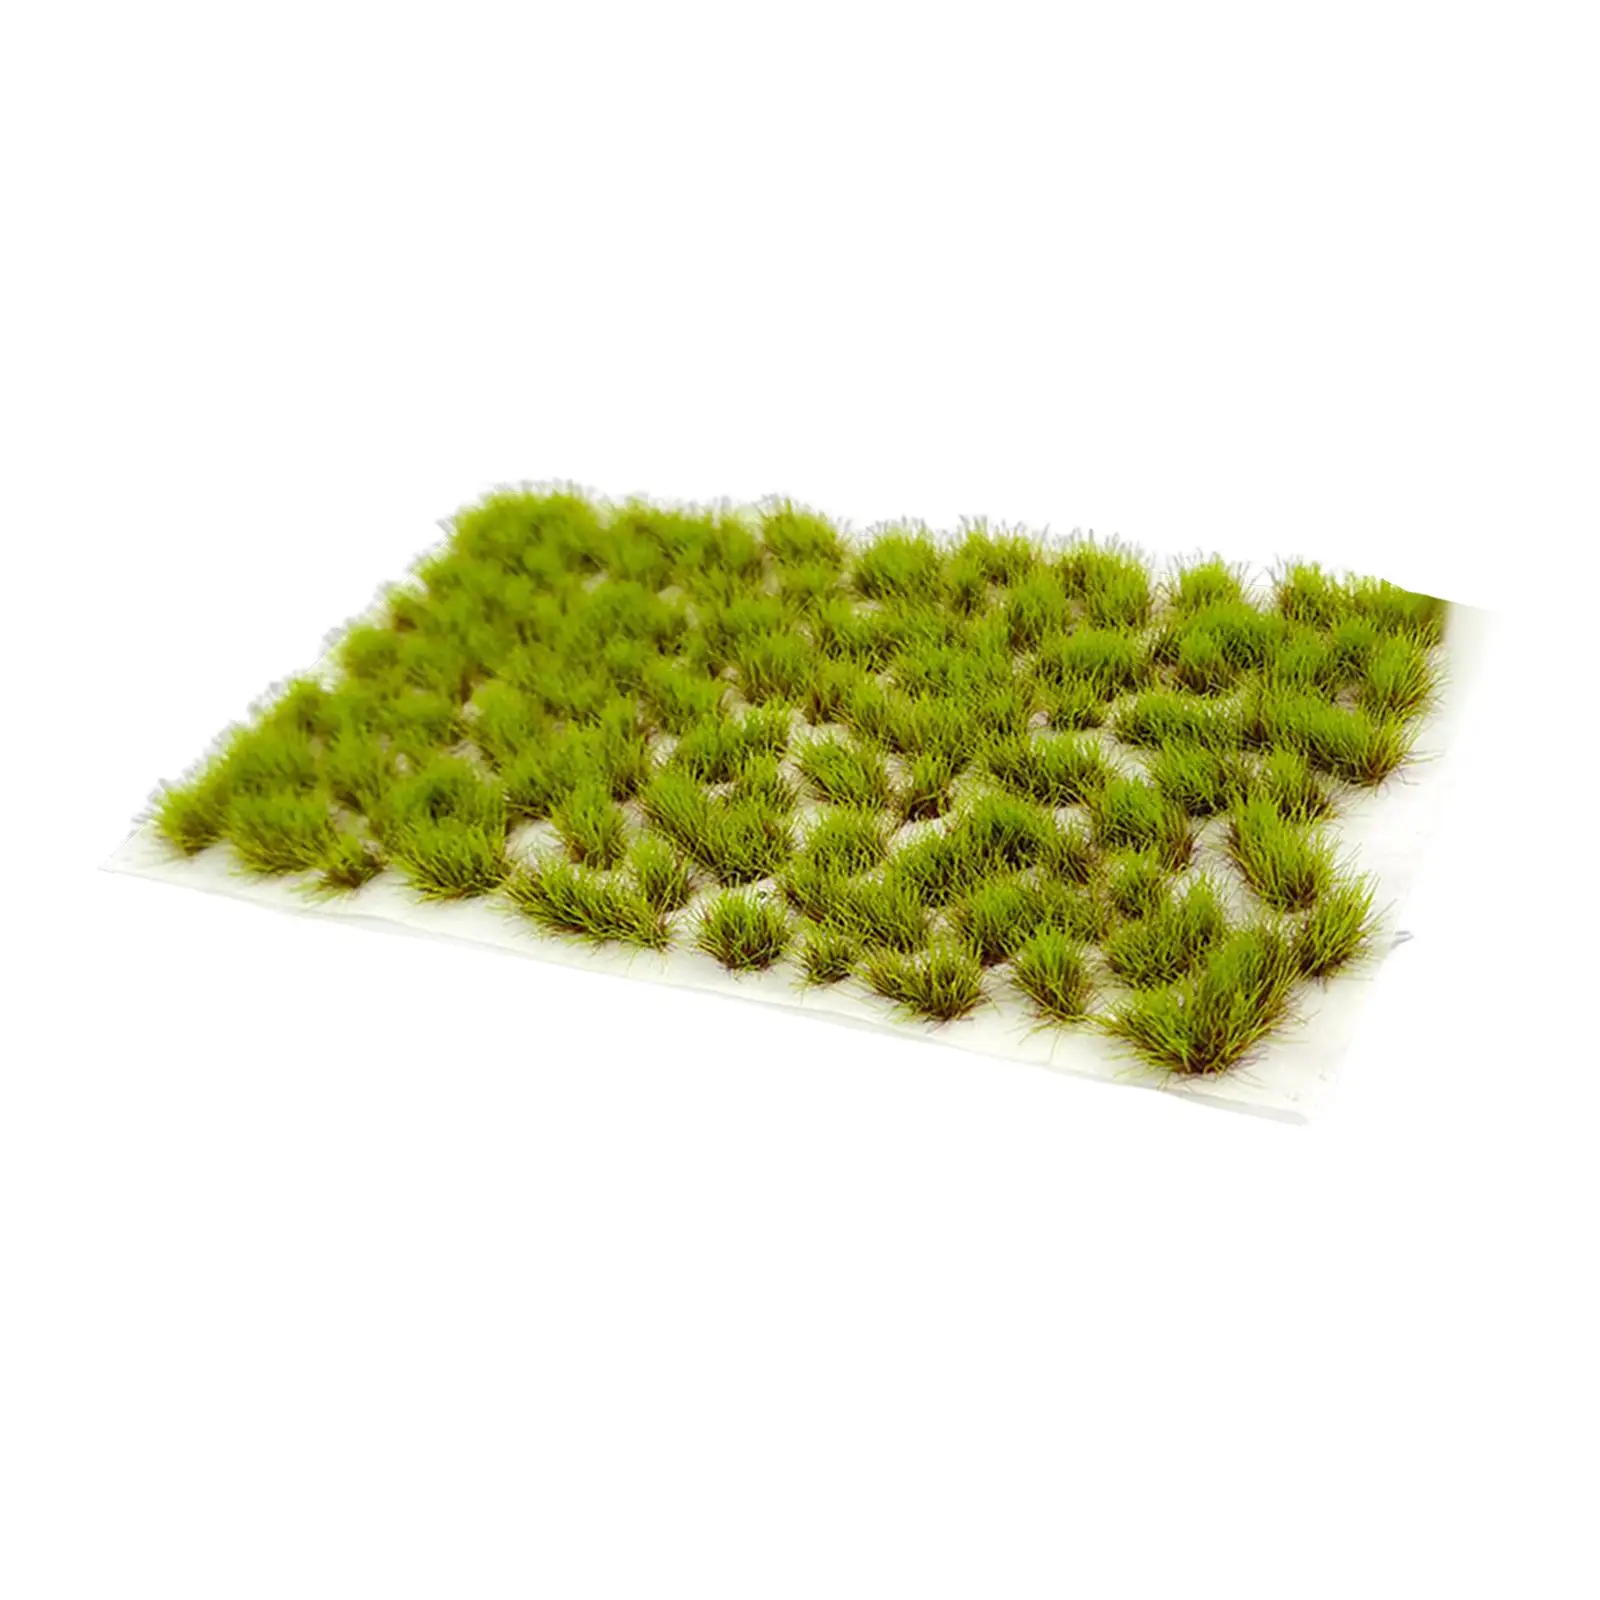 95PCS Grass Scenery Model for Garden Scenery Landscape Building